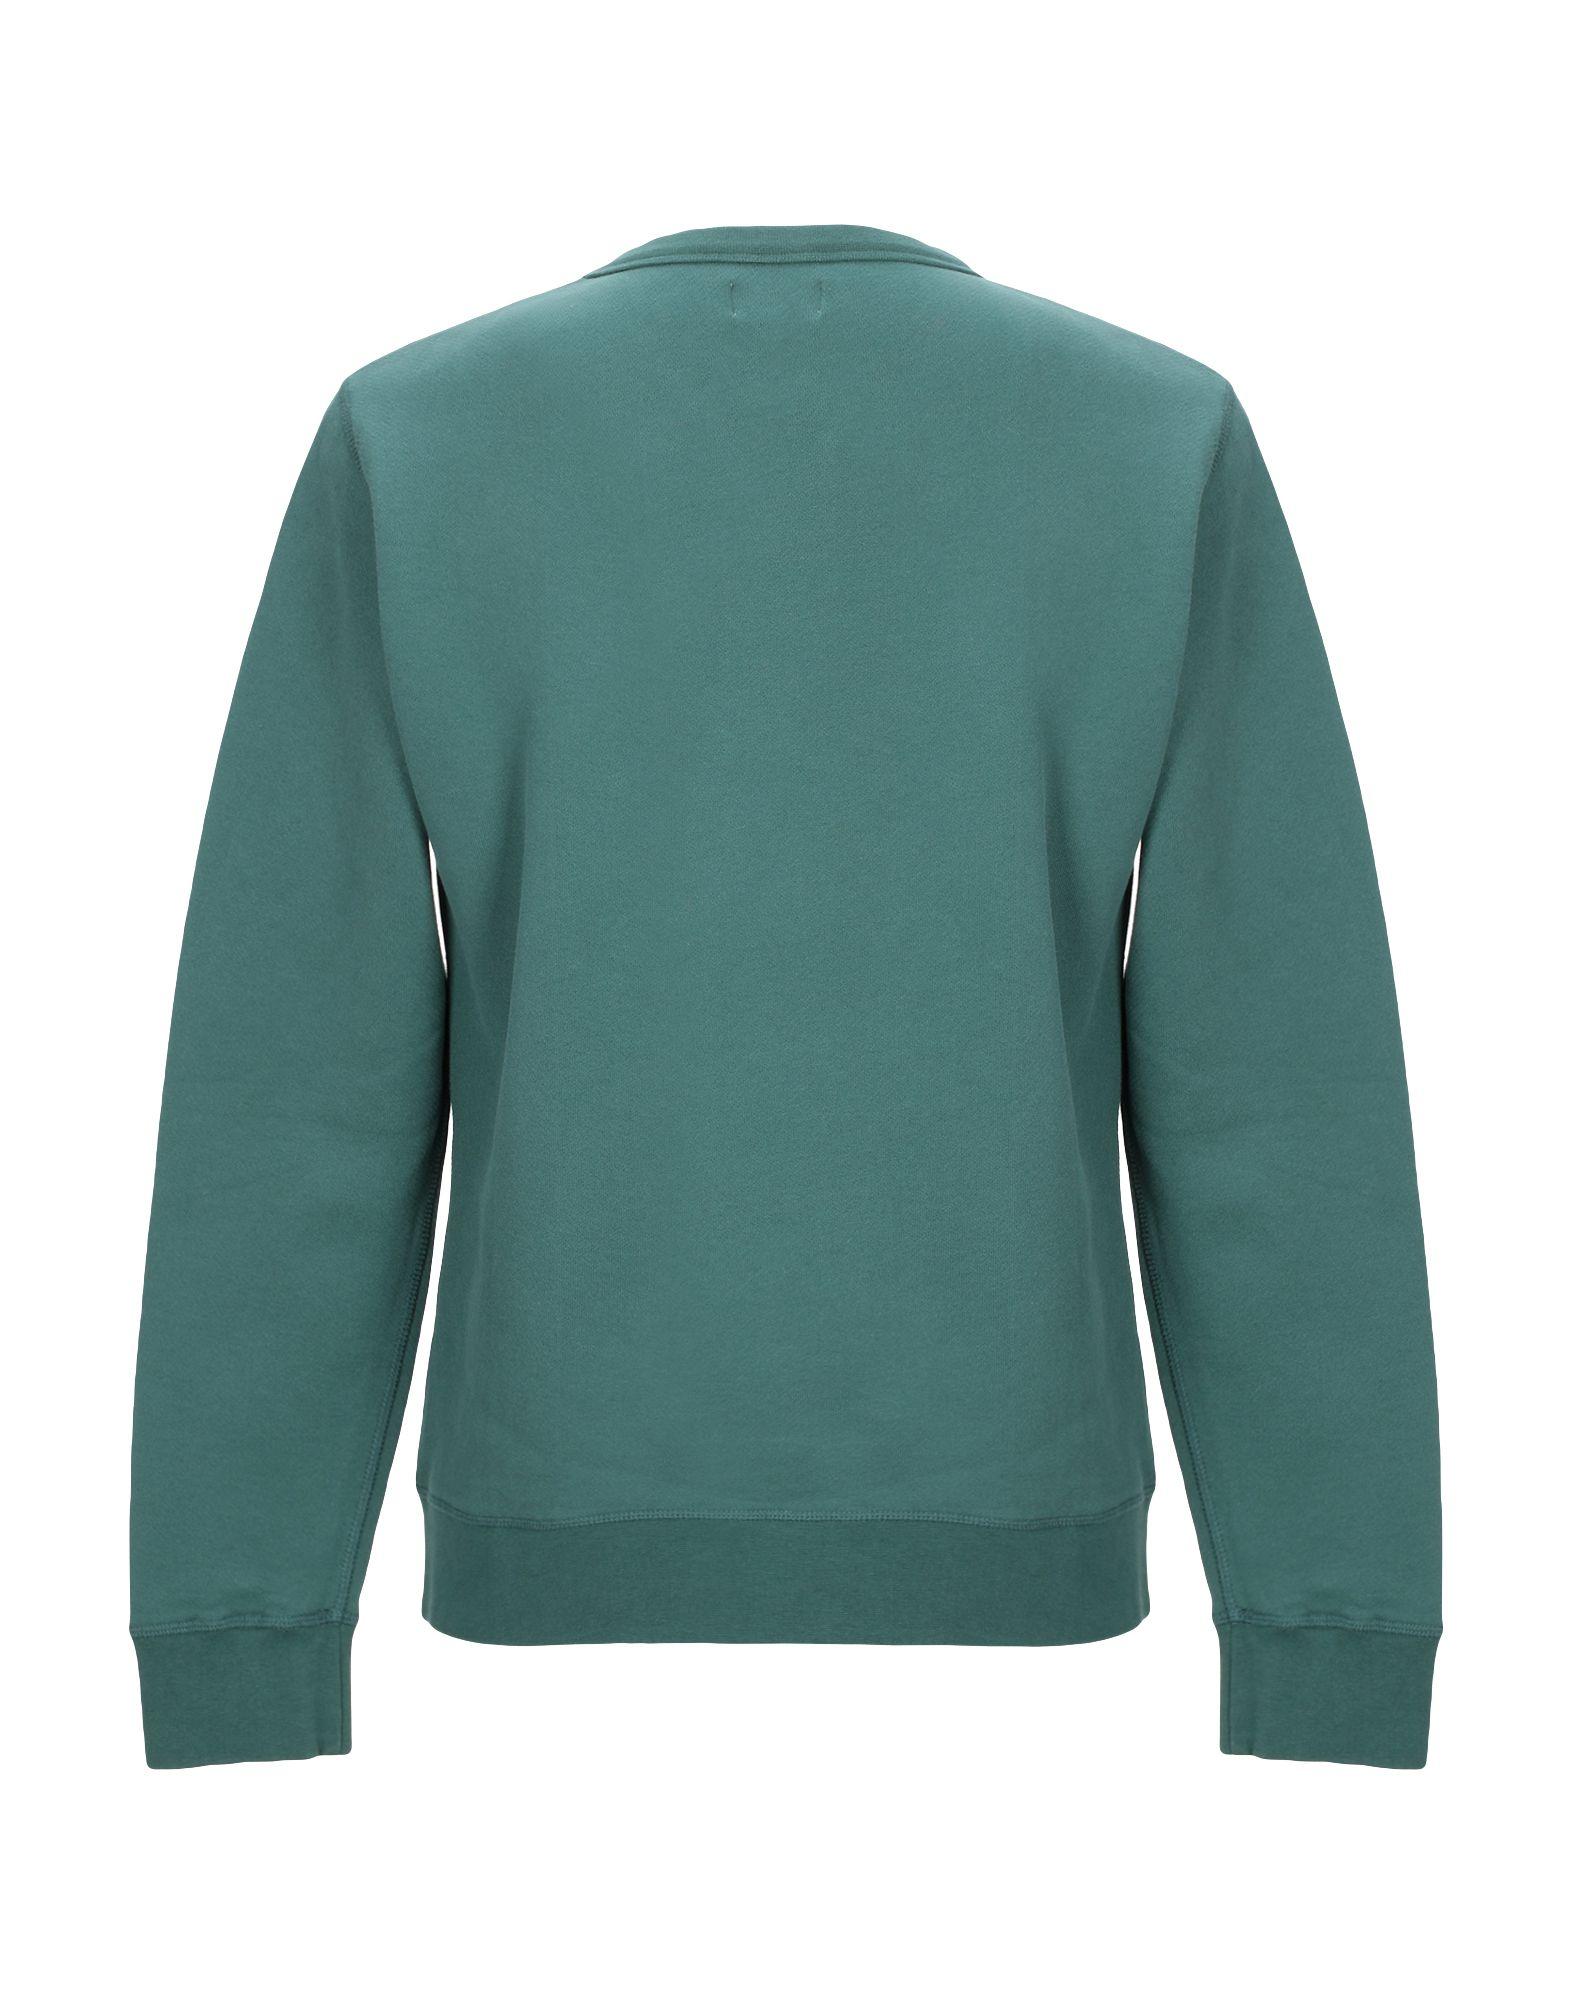 Hartford Fleece Sweatshirt in Dark Green (Green) for Men - Lyst